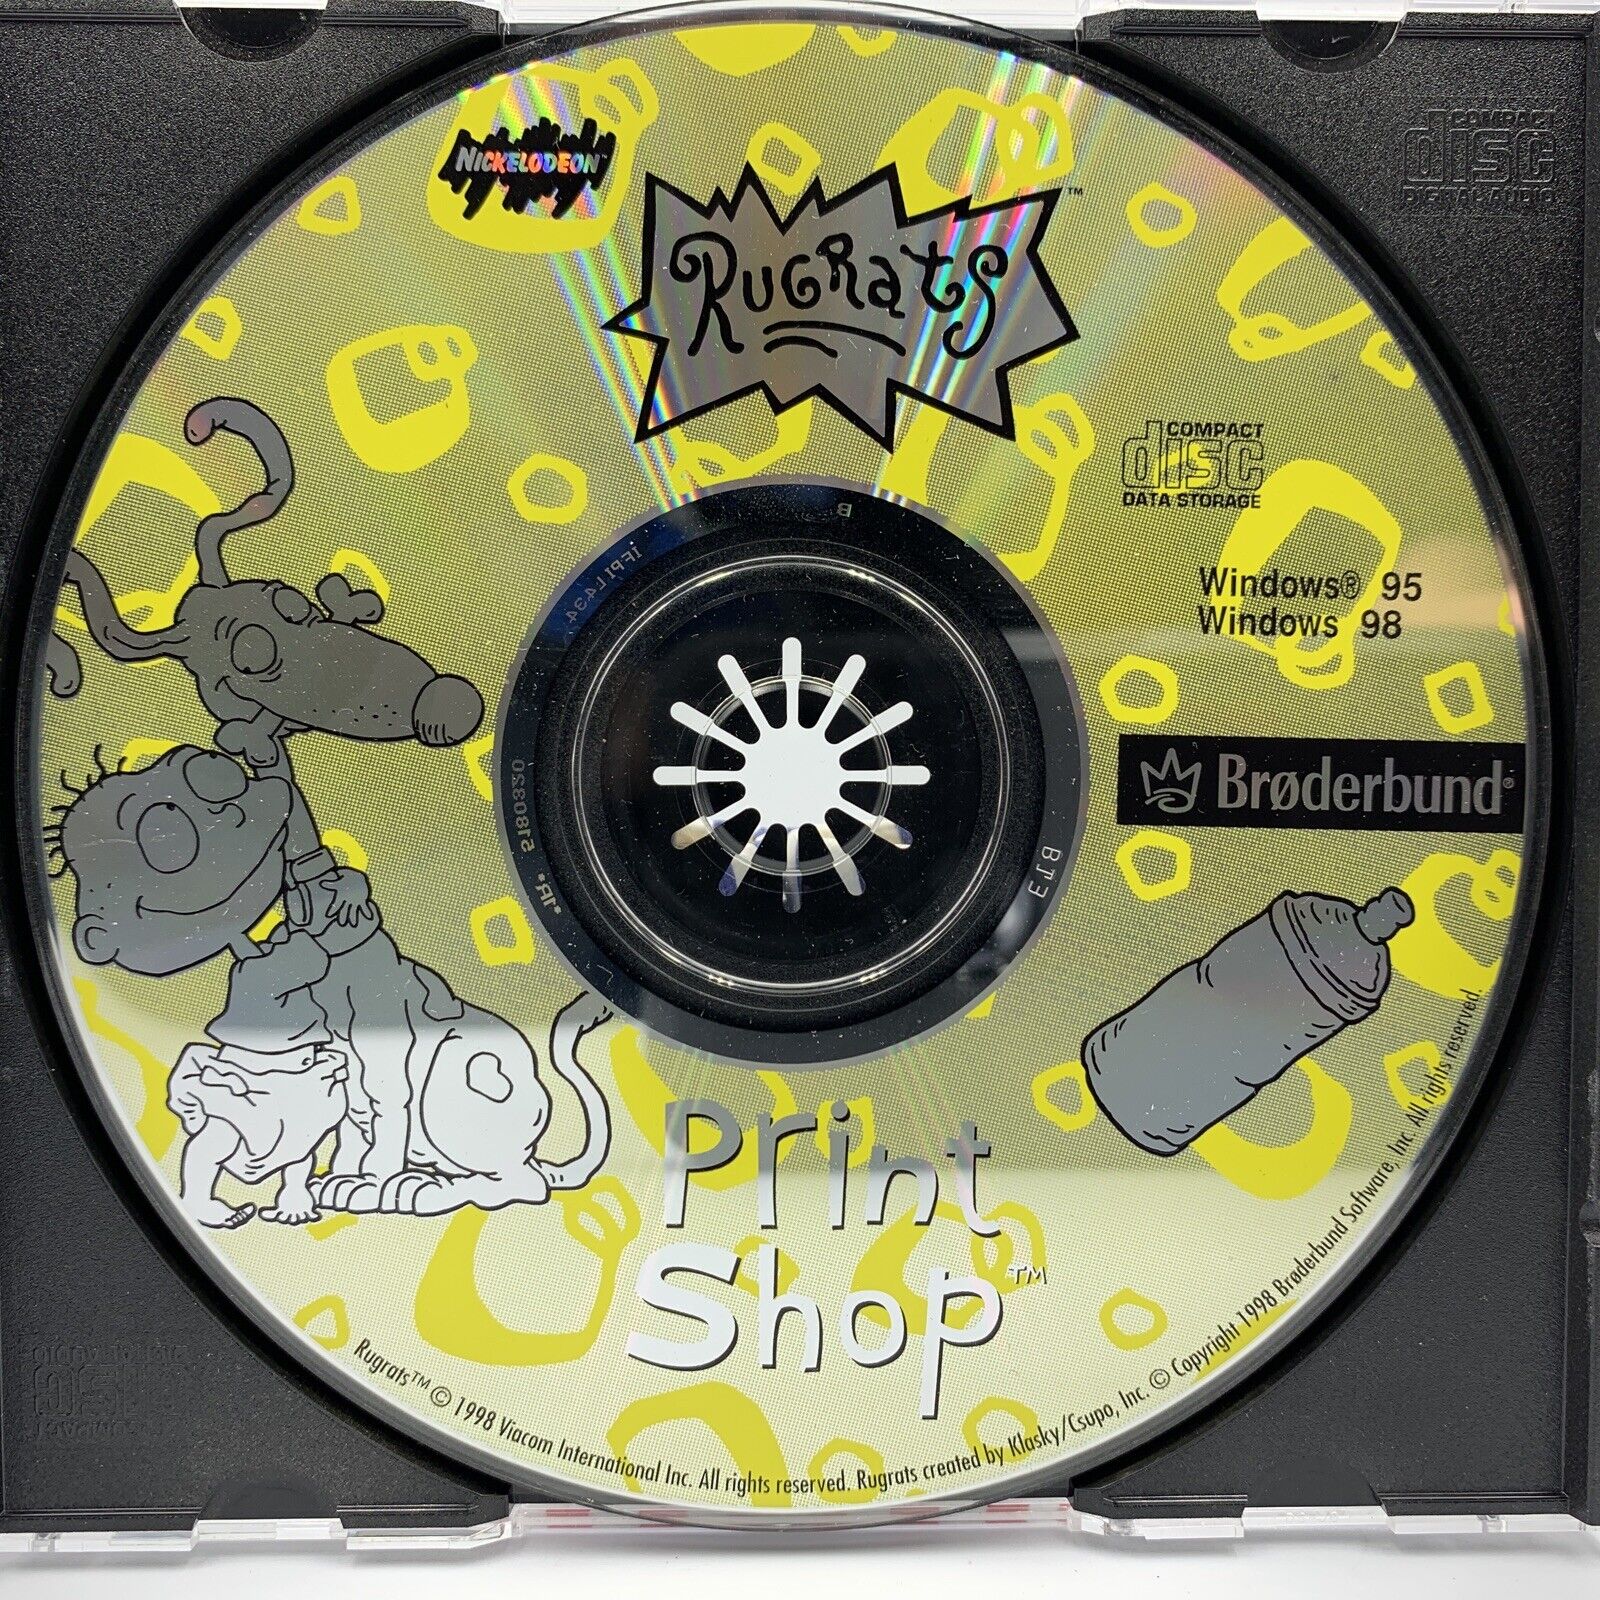 Rugrats Print Shop PC/Mac CD-ROM Broderbund Nickelodeon 1998 for Windows 95/98